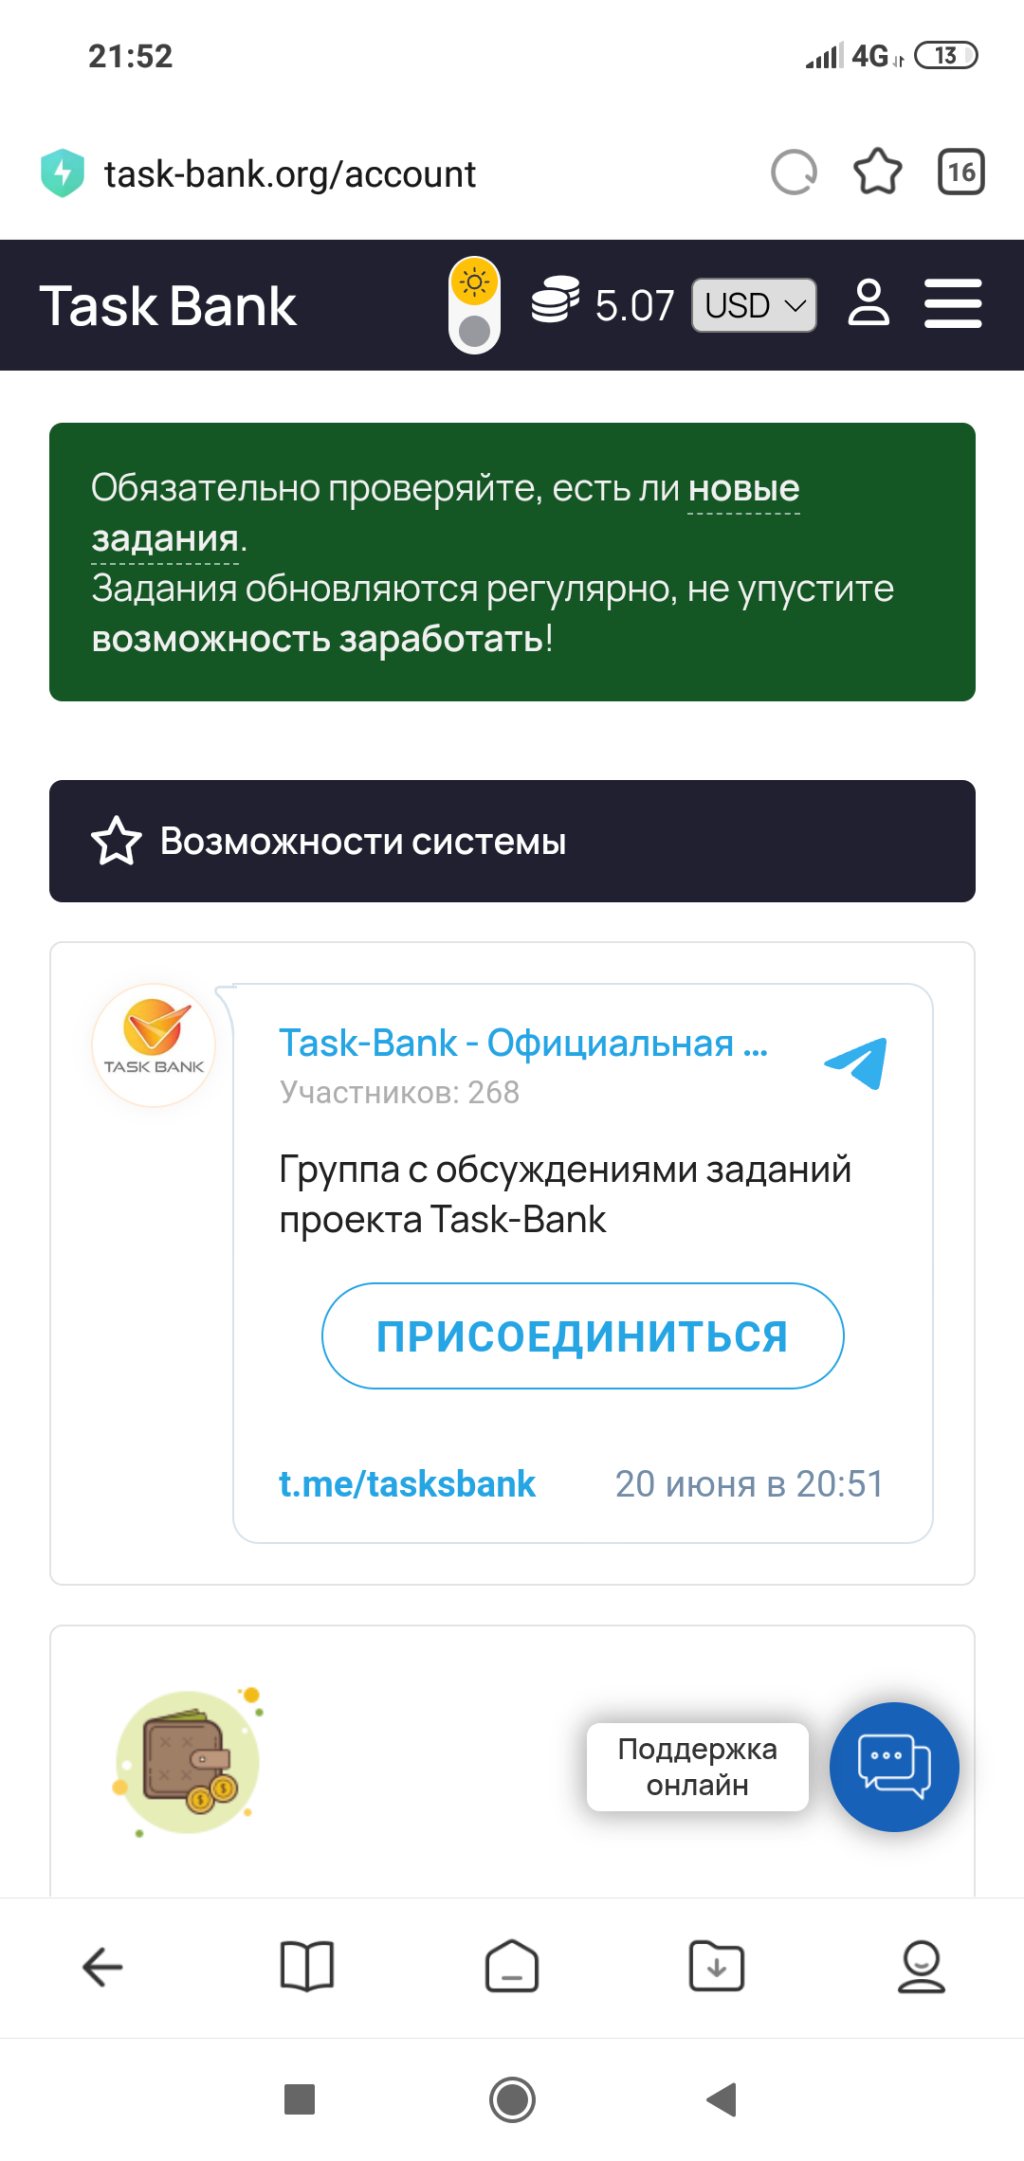 Task-Bank - Работа на сайте Task -Bank